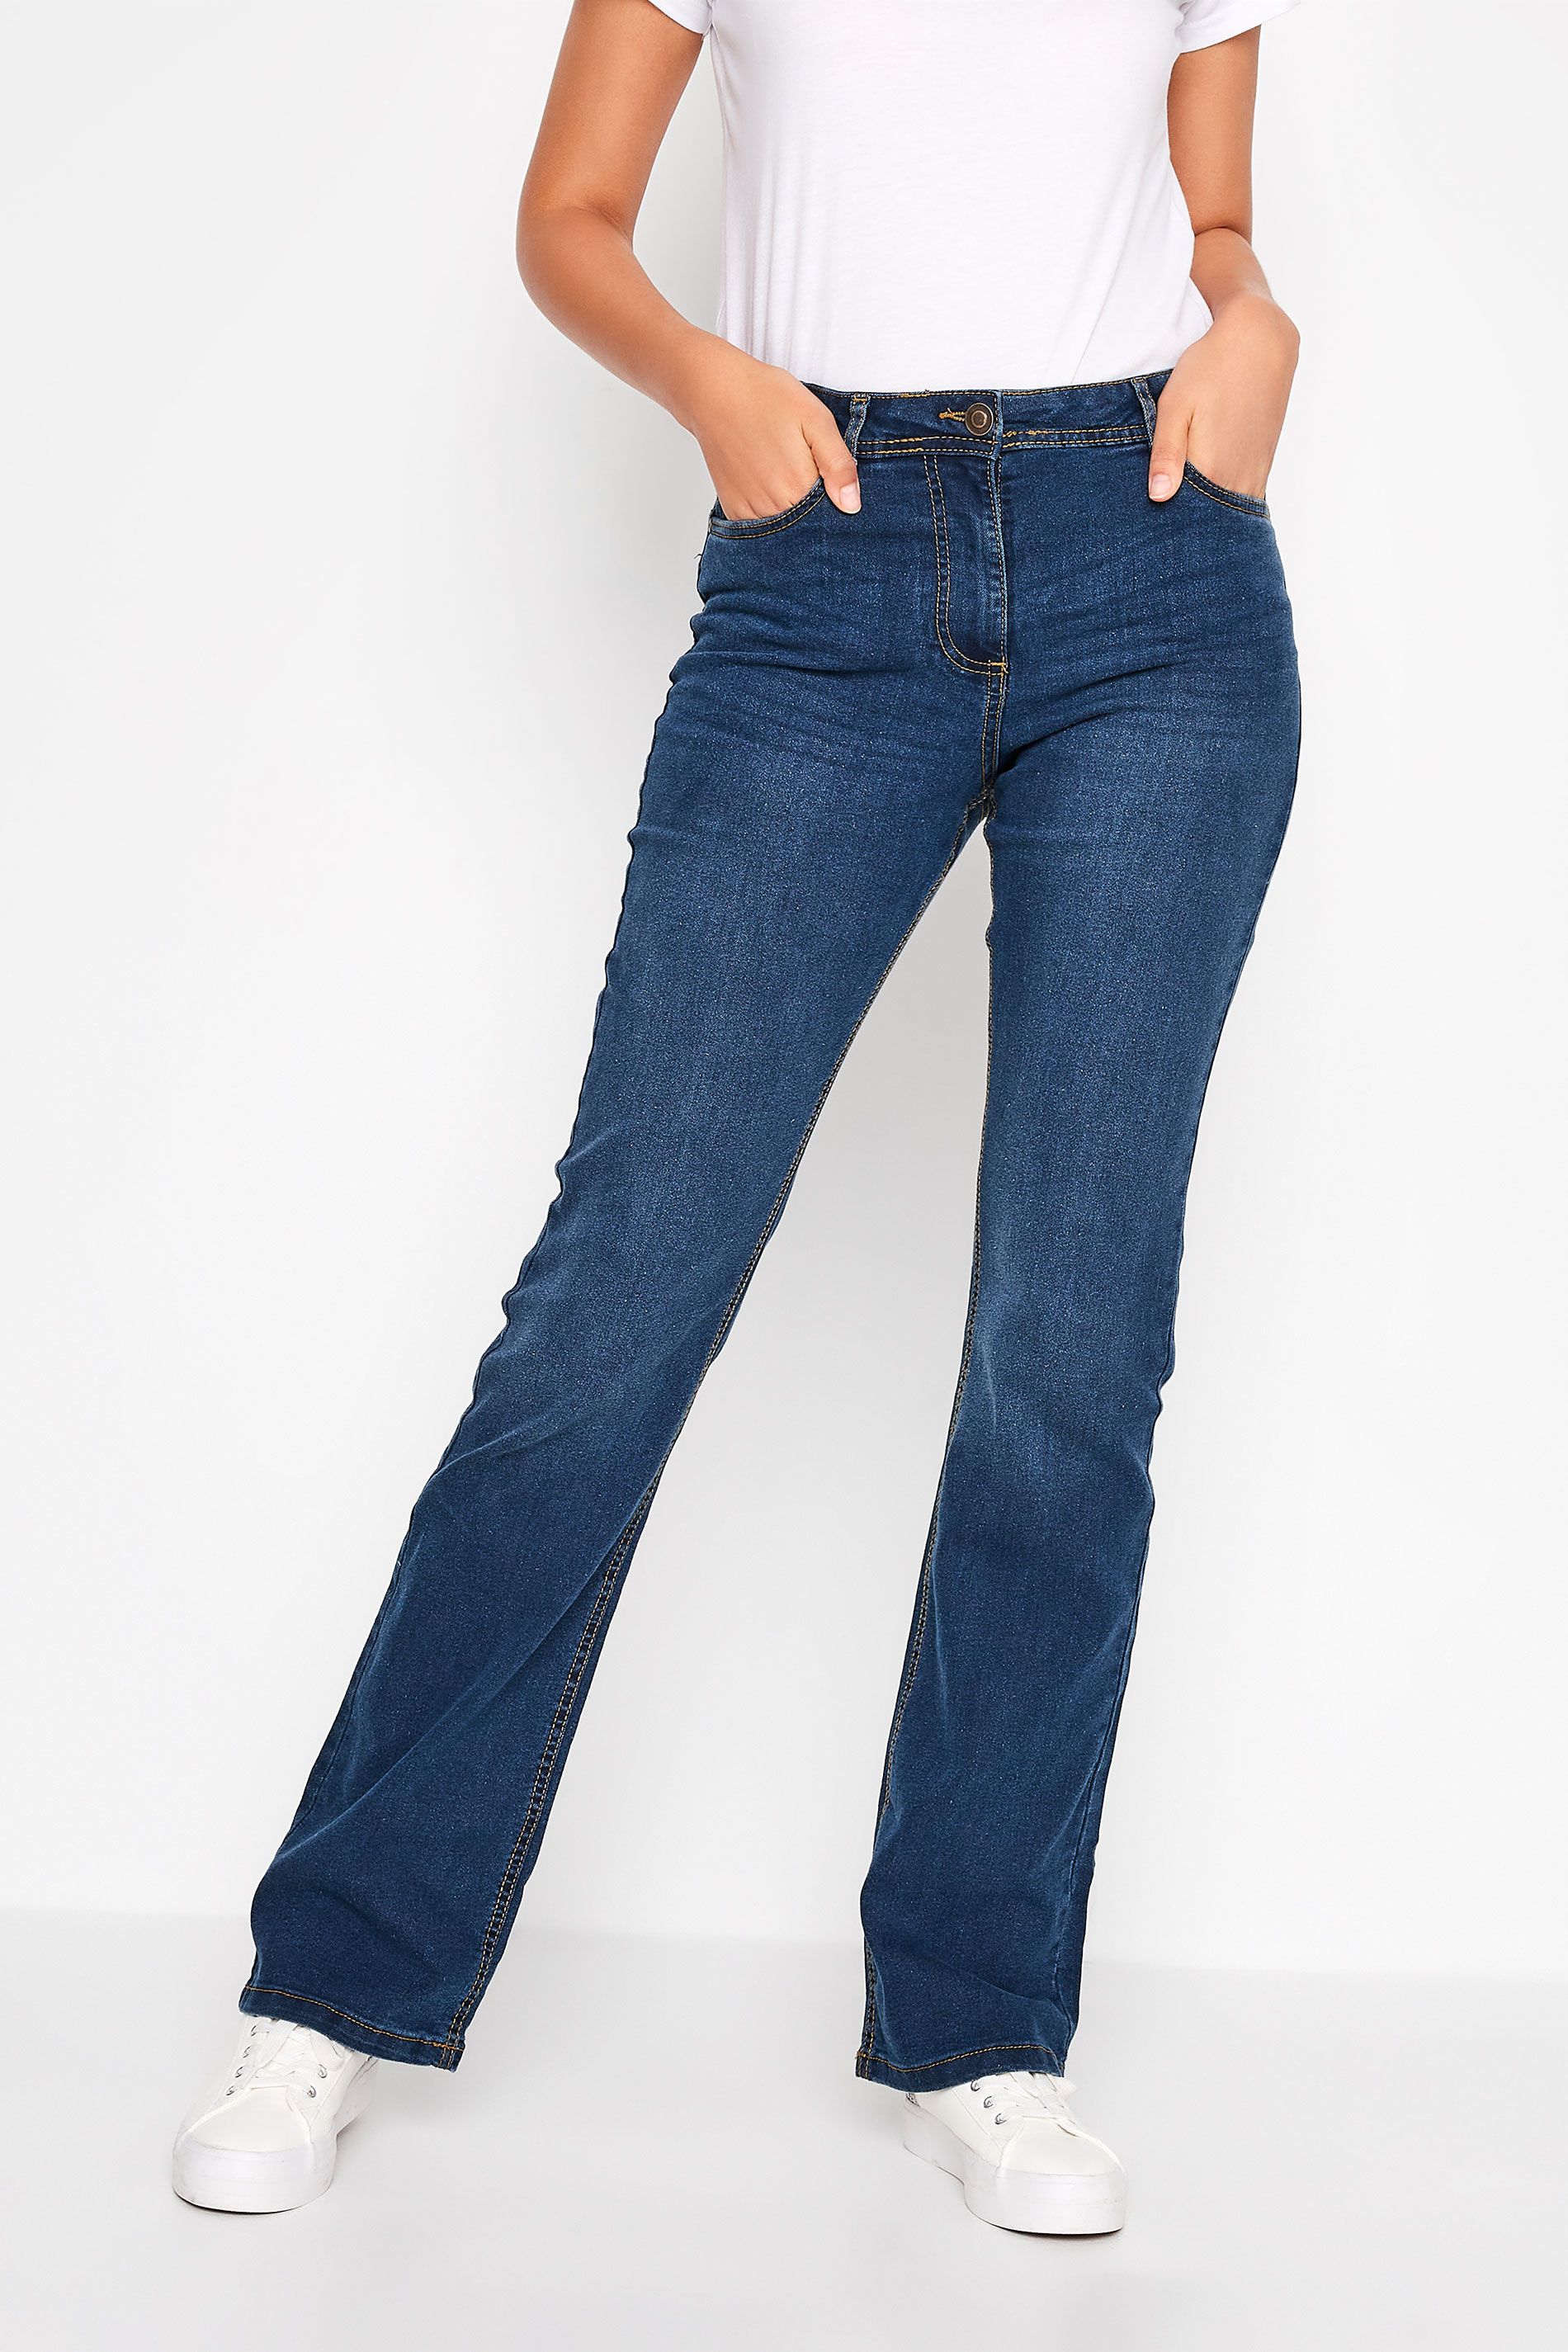 LTS Tall Blue RAE Stretch Bootcut Jeans | Long Tall Sally